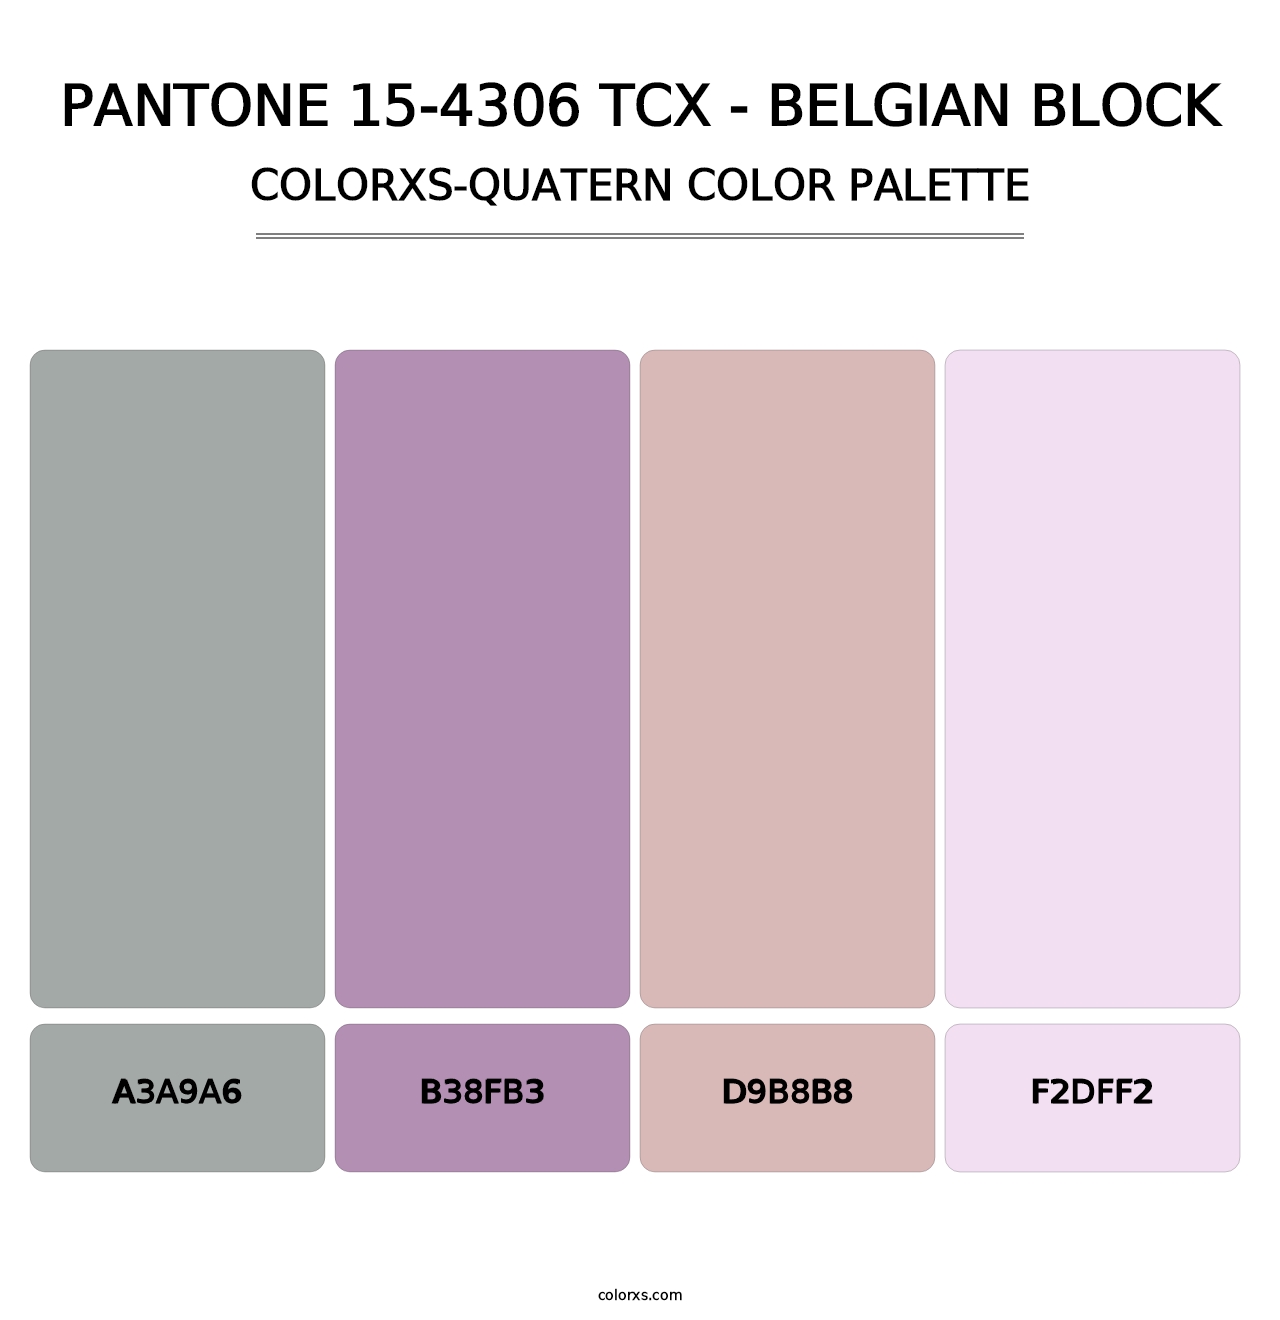 PANTONE 15-4306 TCX - Belgian Block - Colorxs Quatern Palette